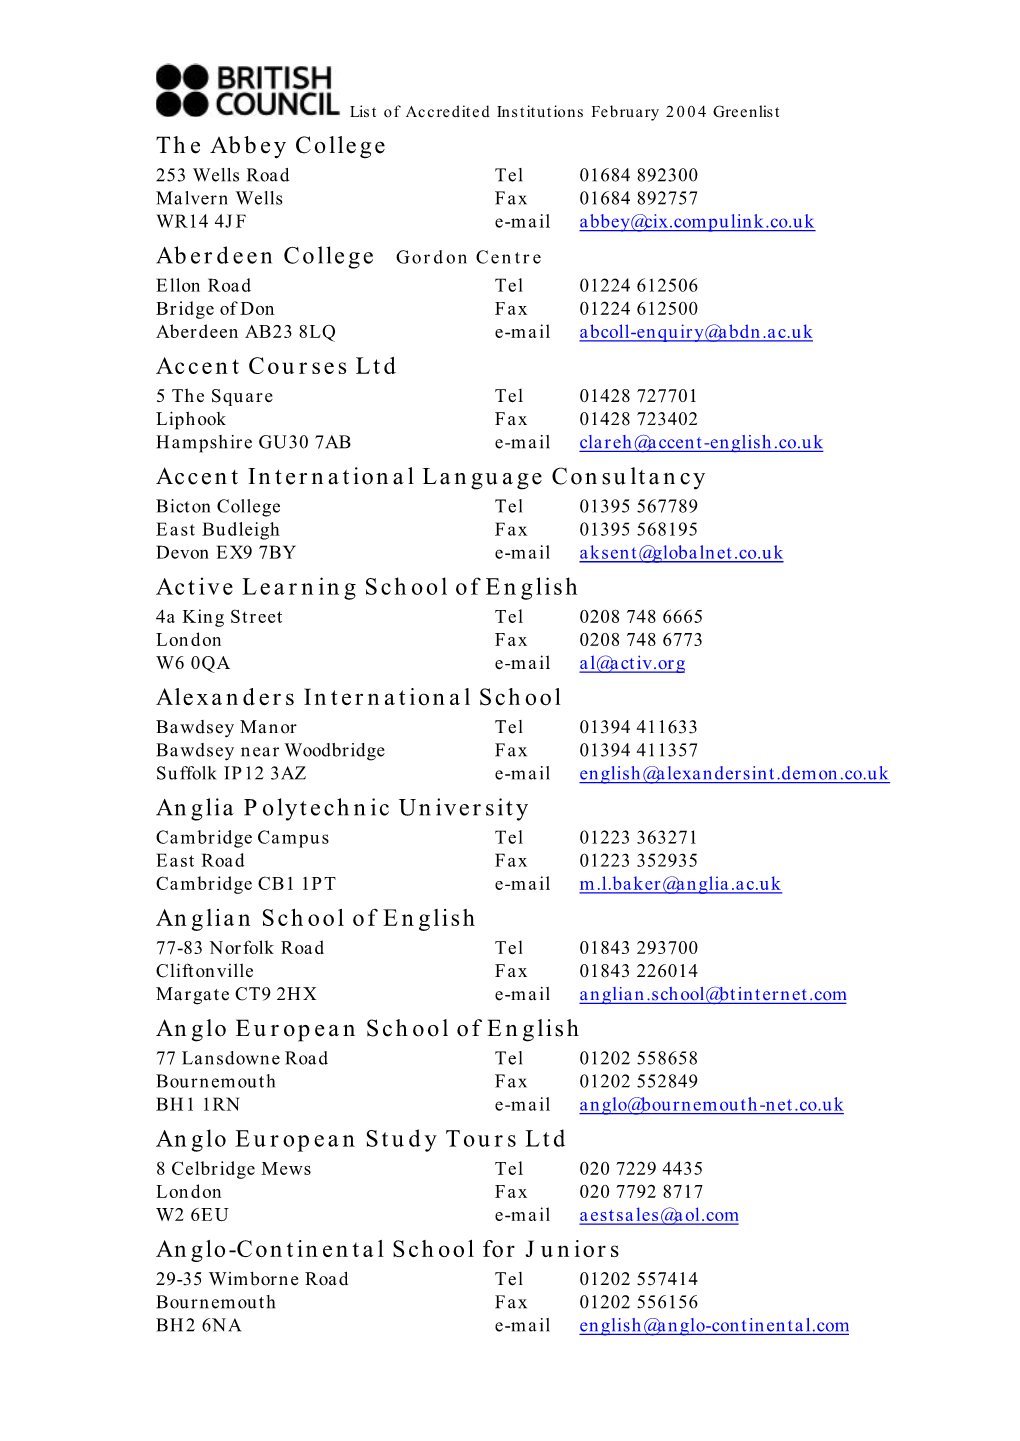 The Abbey College Aberdeen College Gordon Centre Accent Courses Ltd